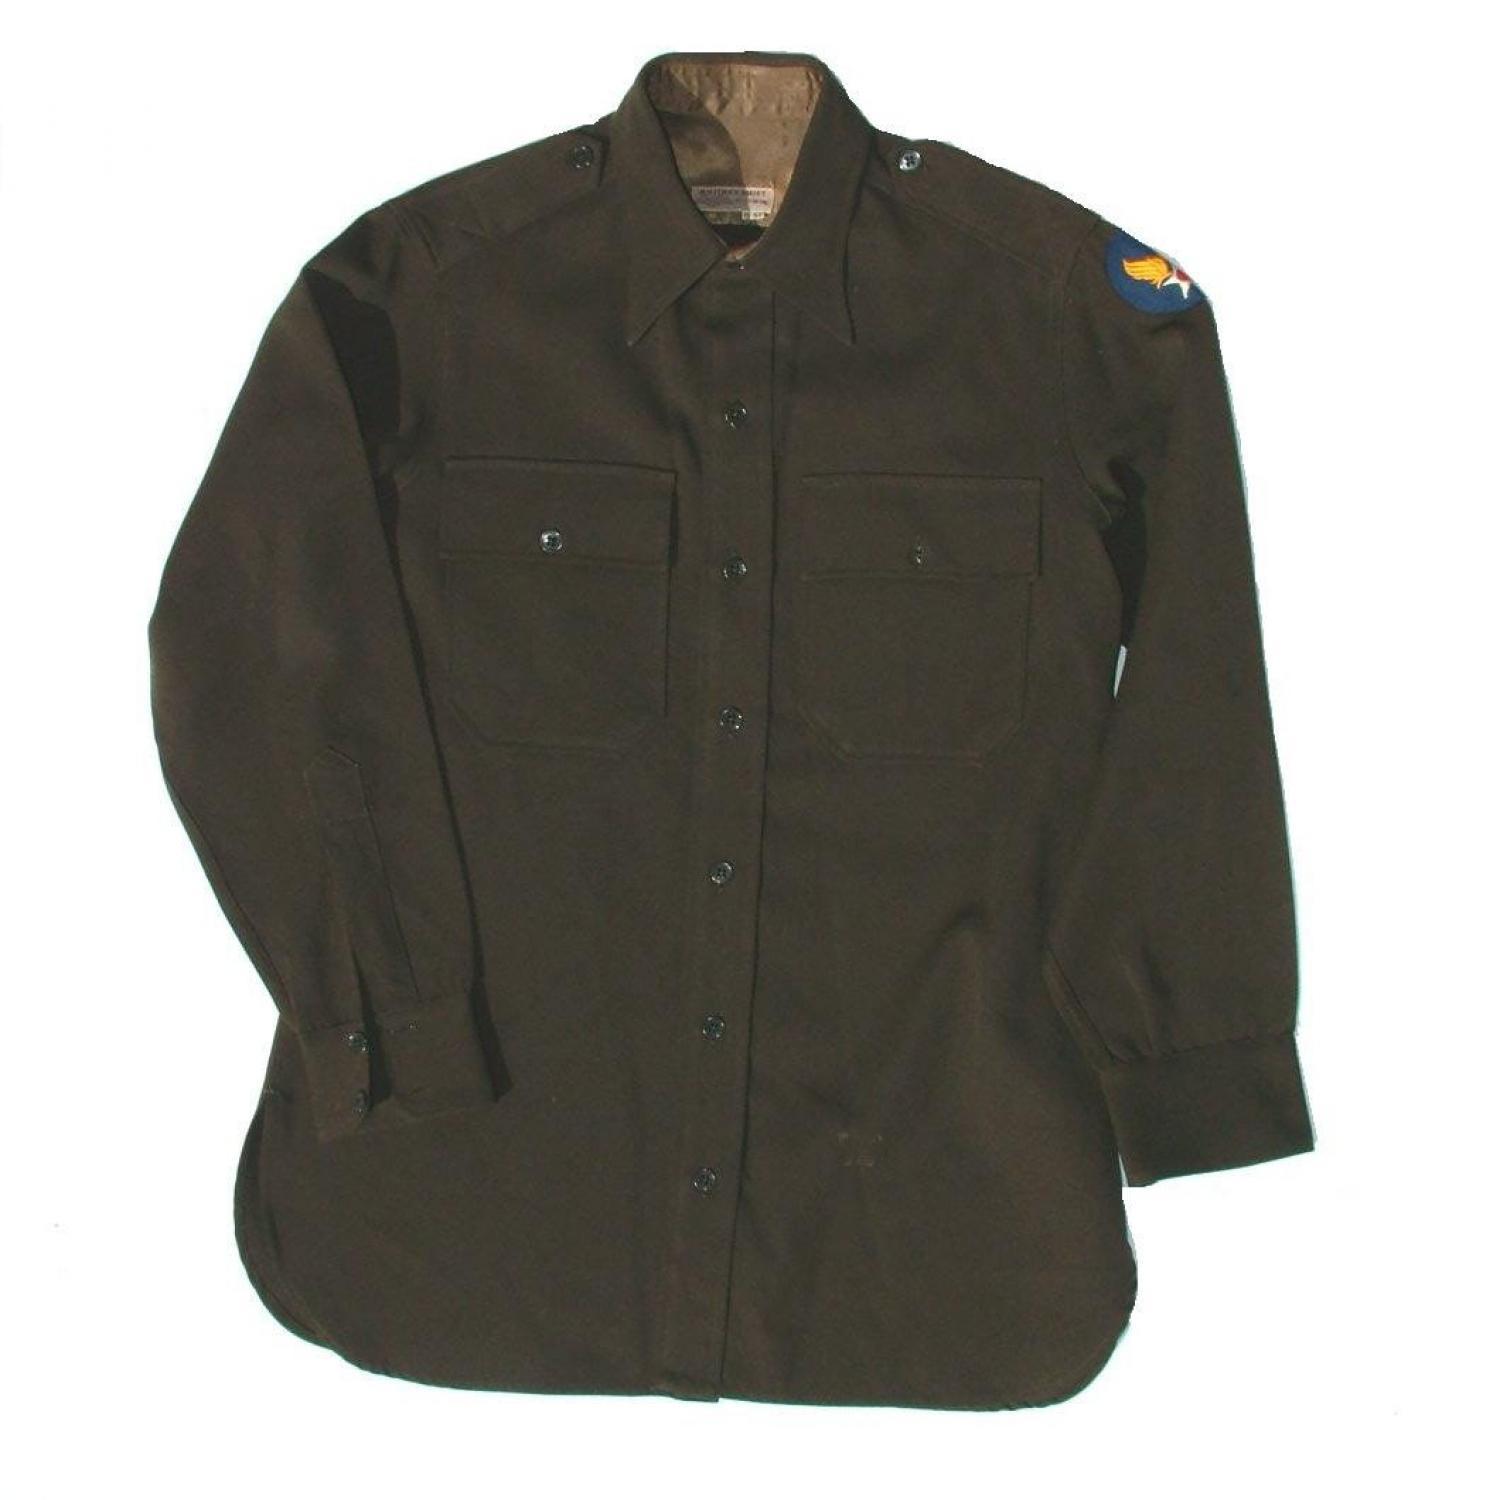 USAAF Officers 'Chocolate' Shirt